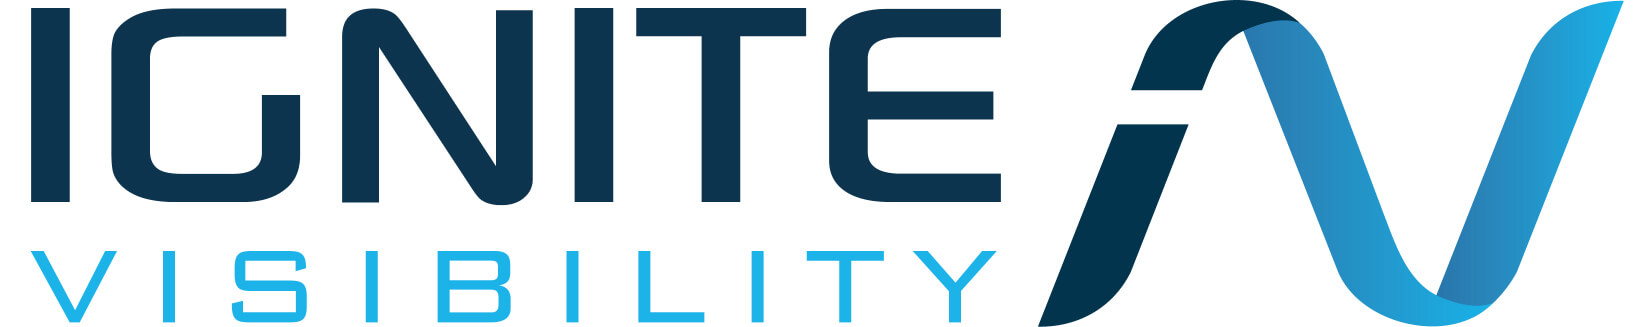 Best Enterprise SEO Firm Logo: Ignite Visibility